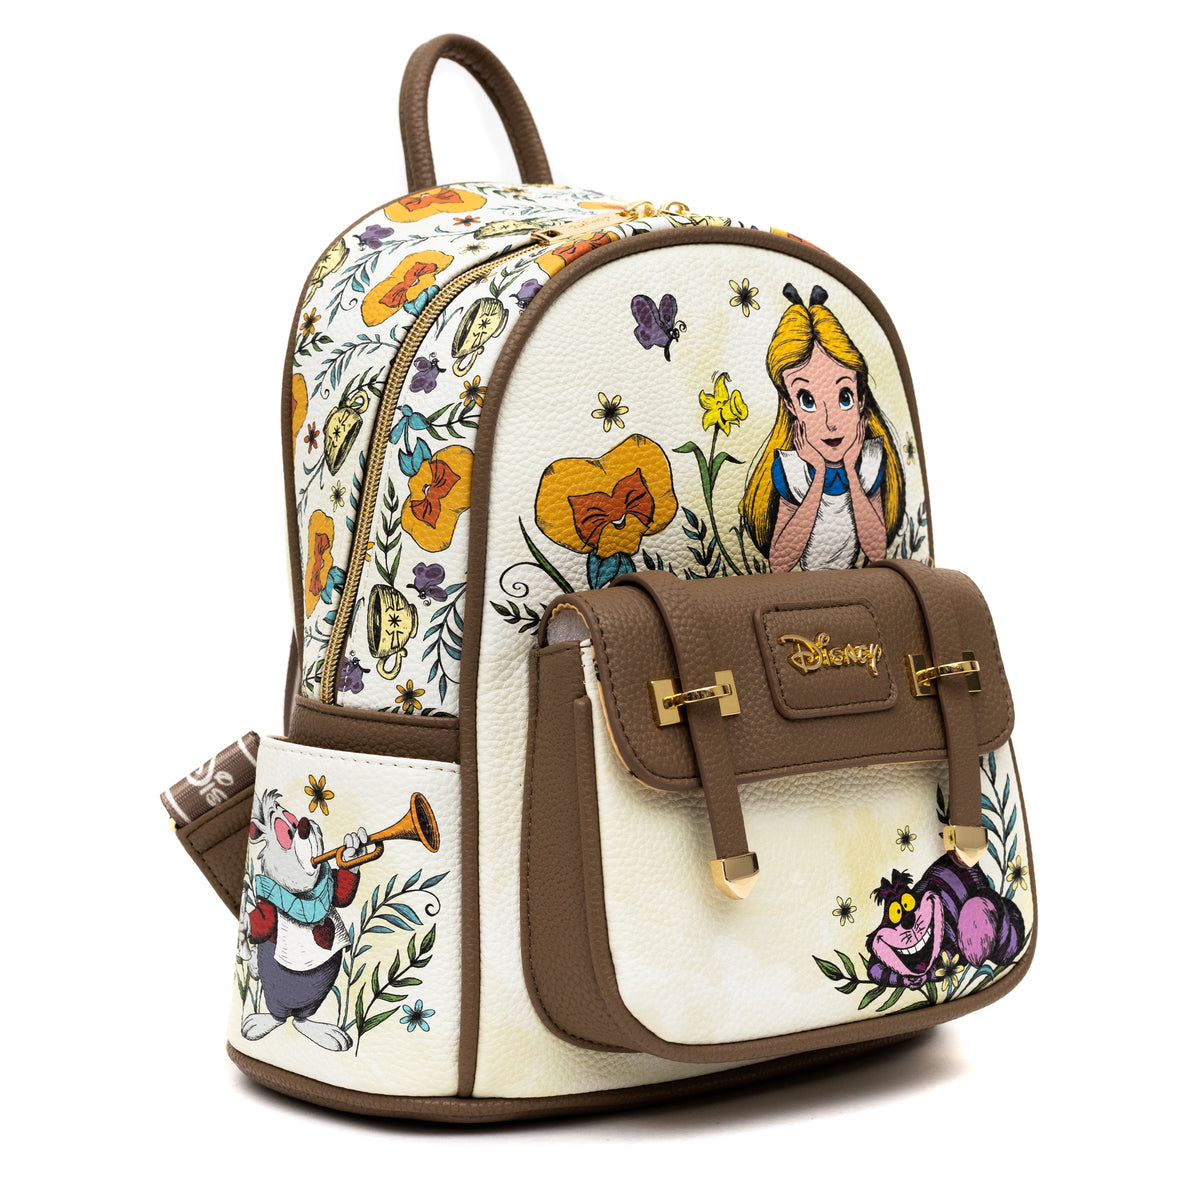 Disney Alice in Wonderland Backpack - Limited Edition